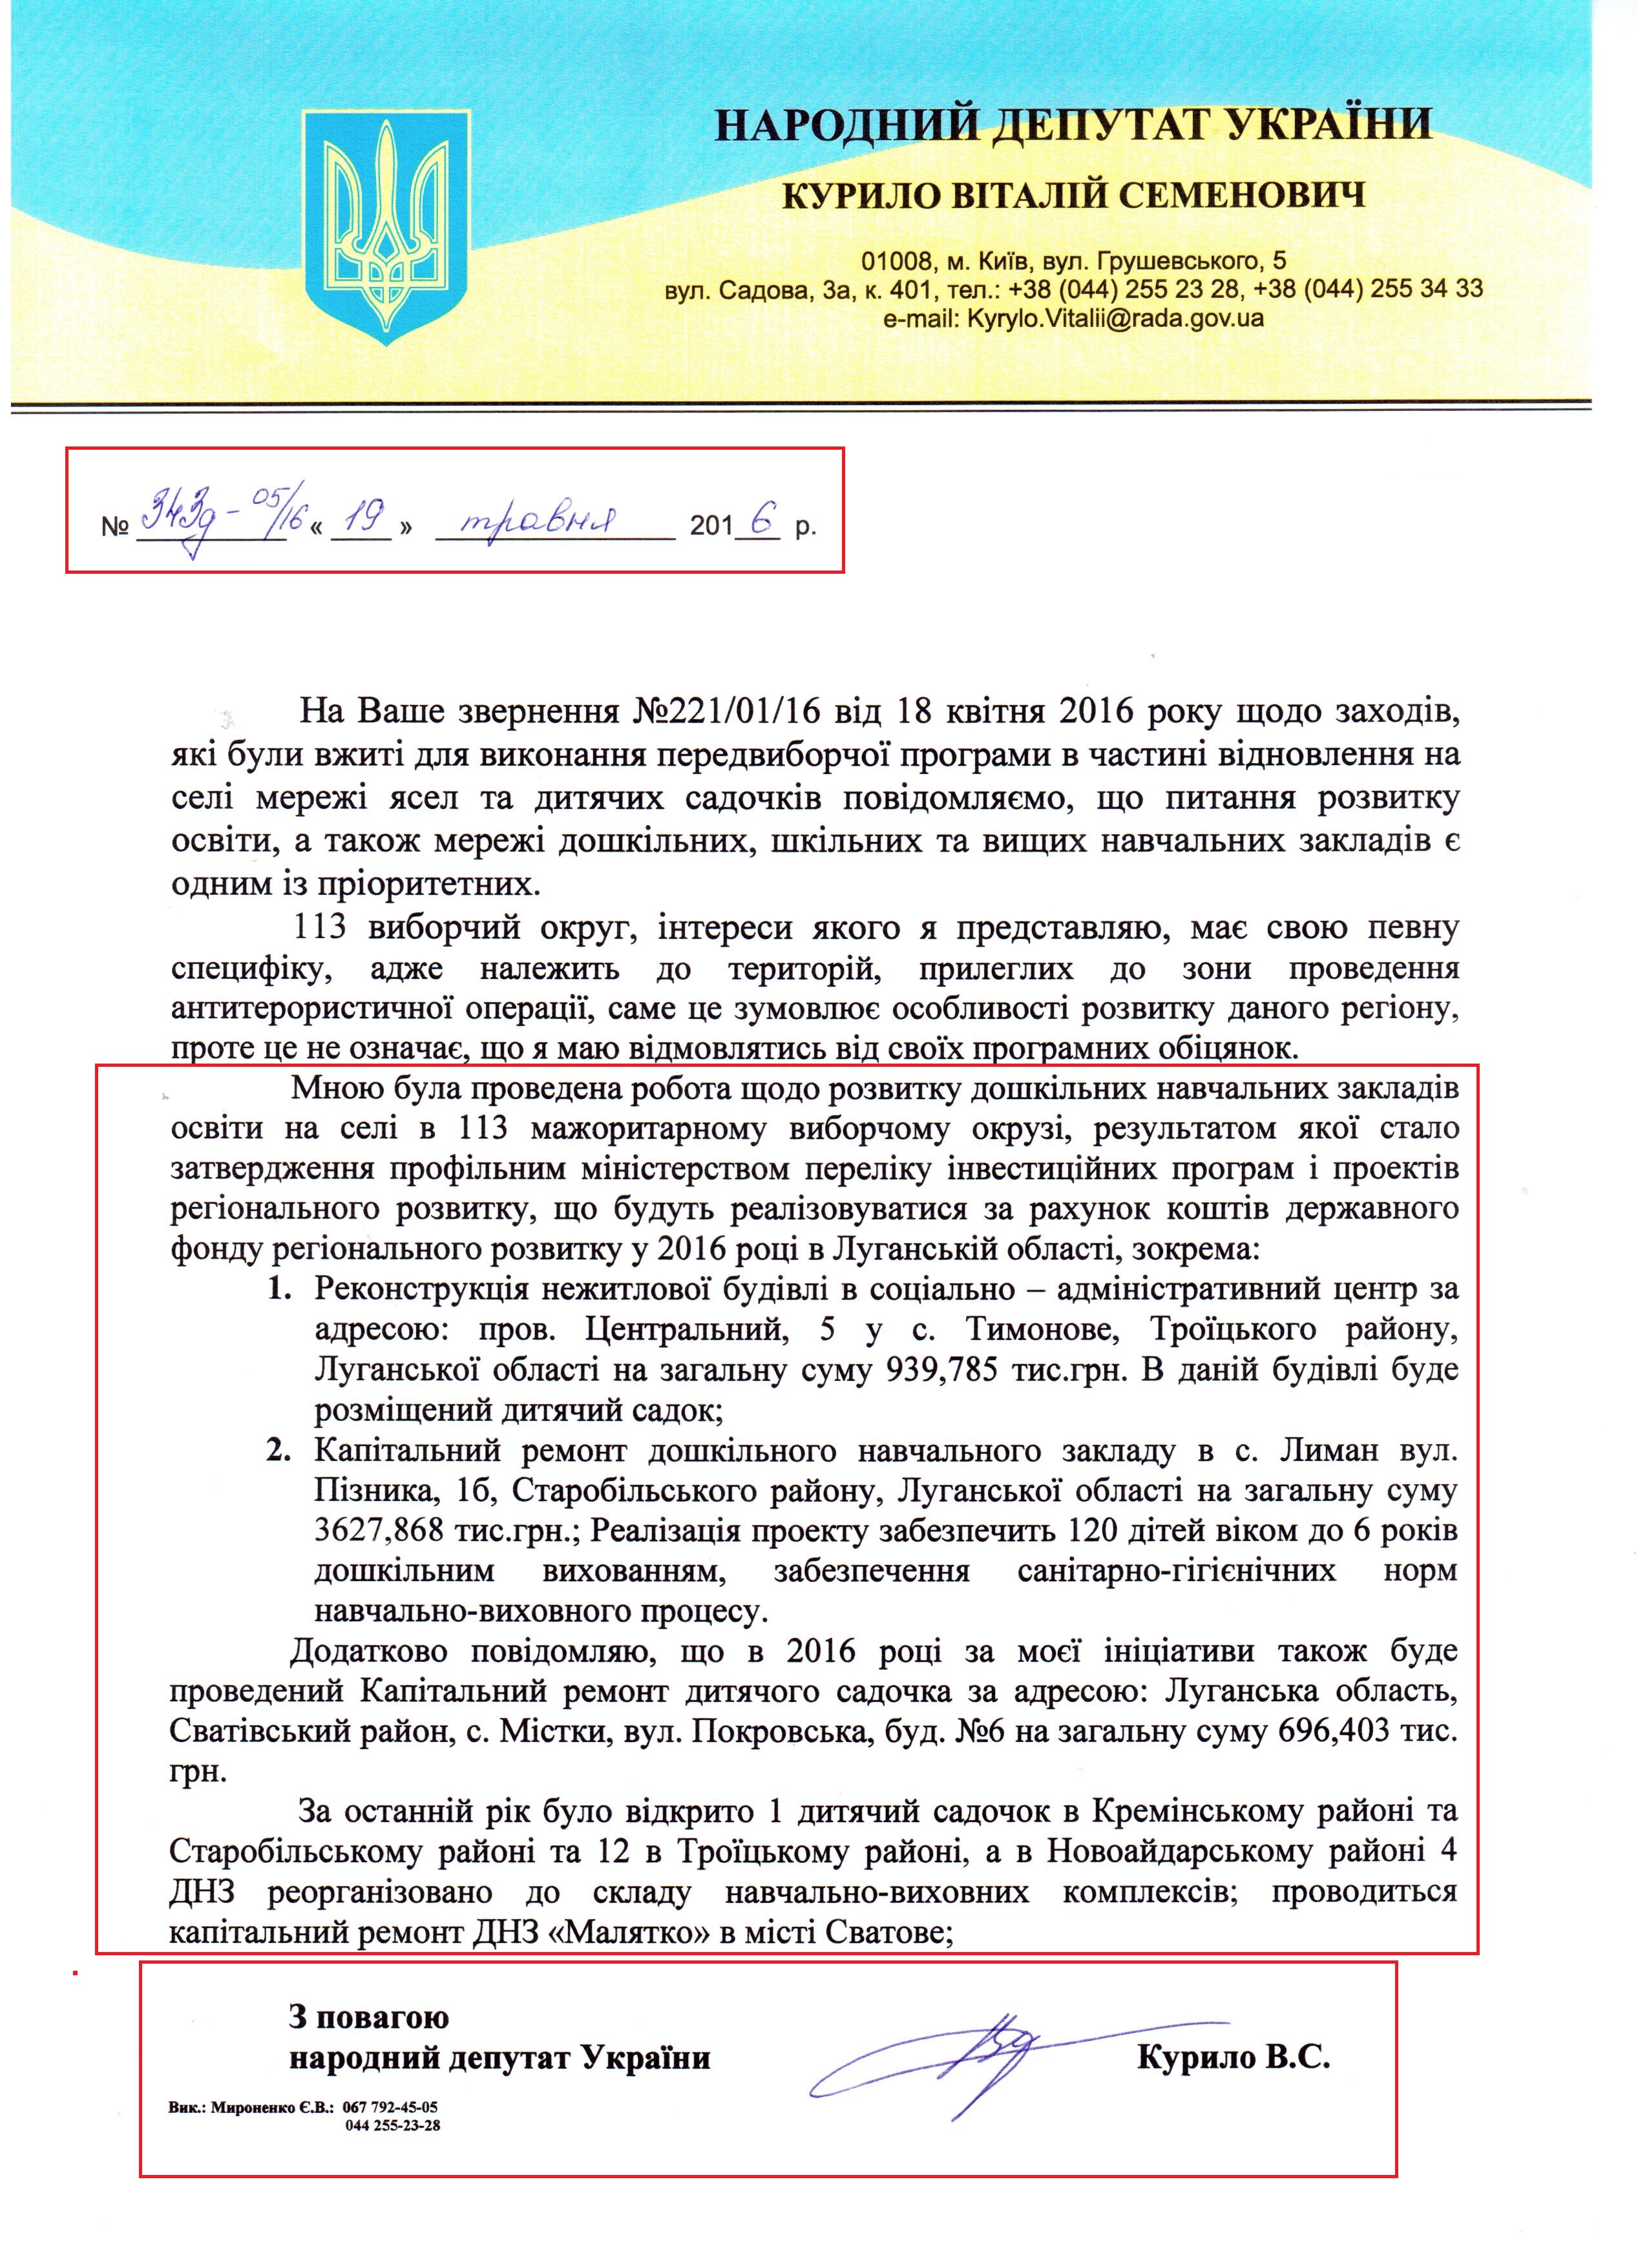 лист народного депутата  